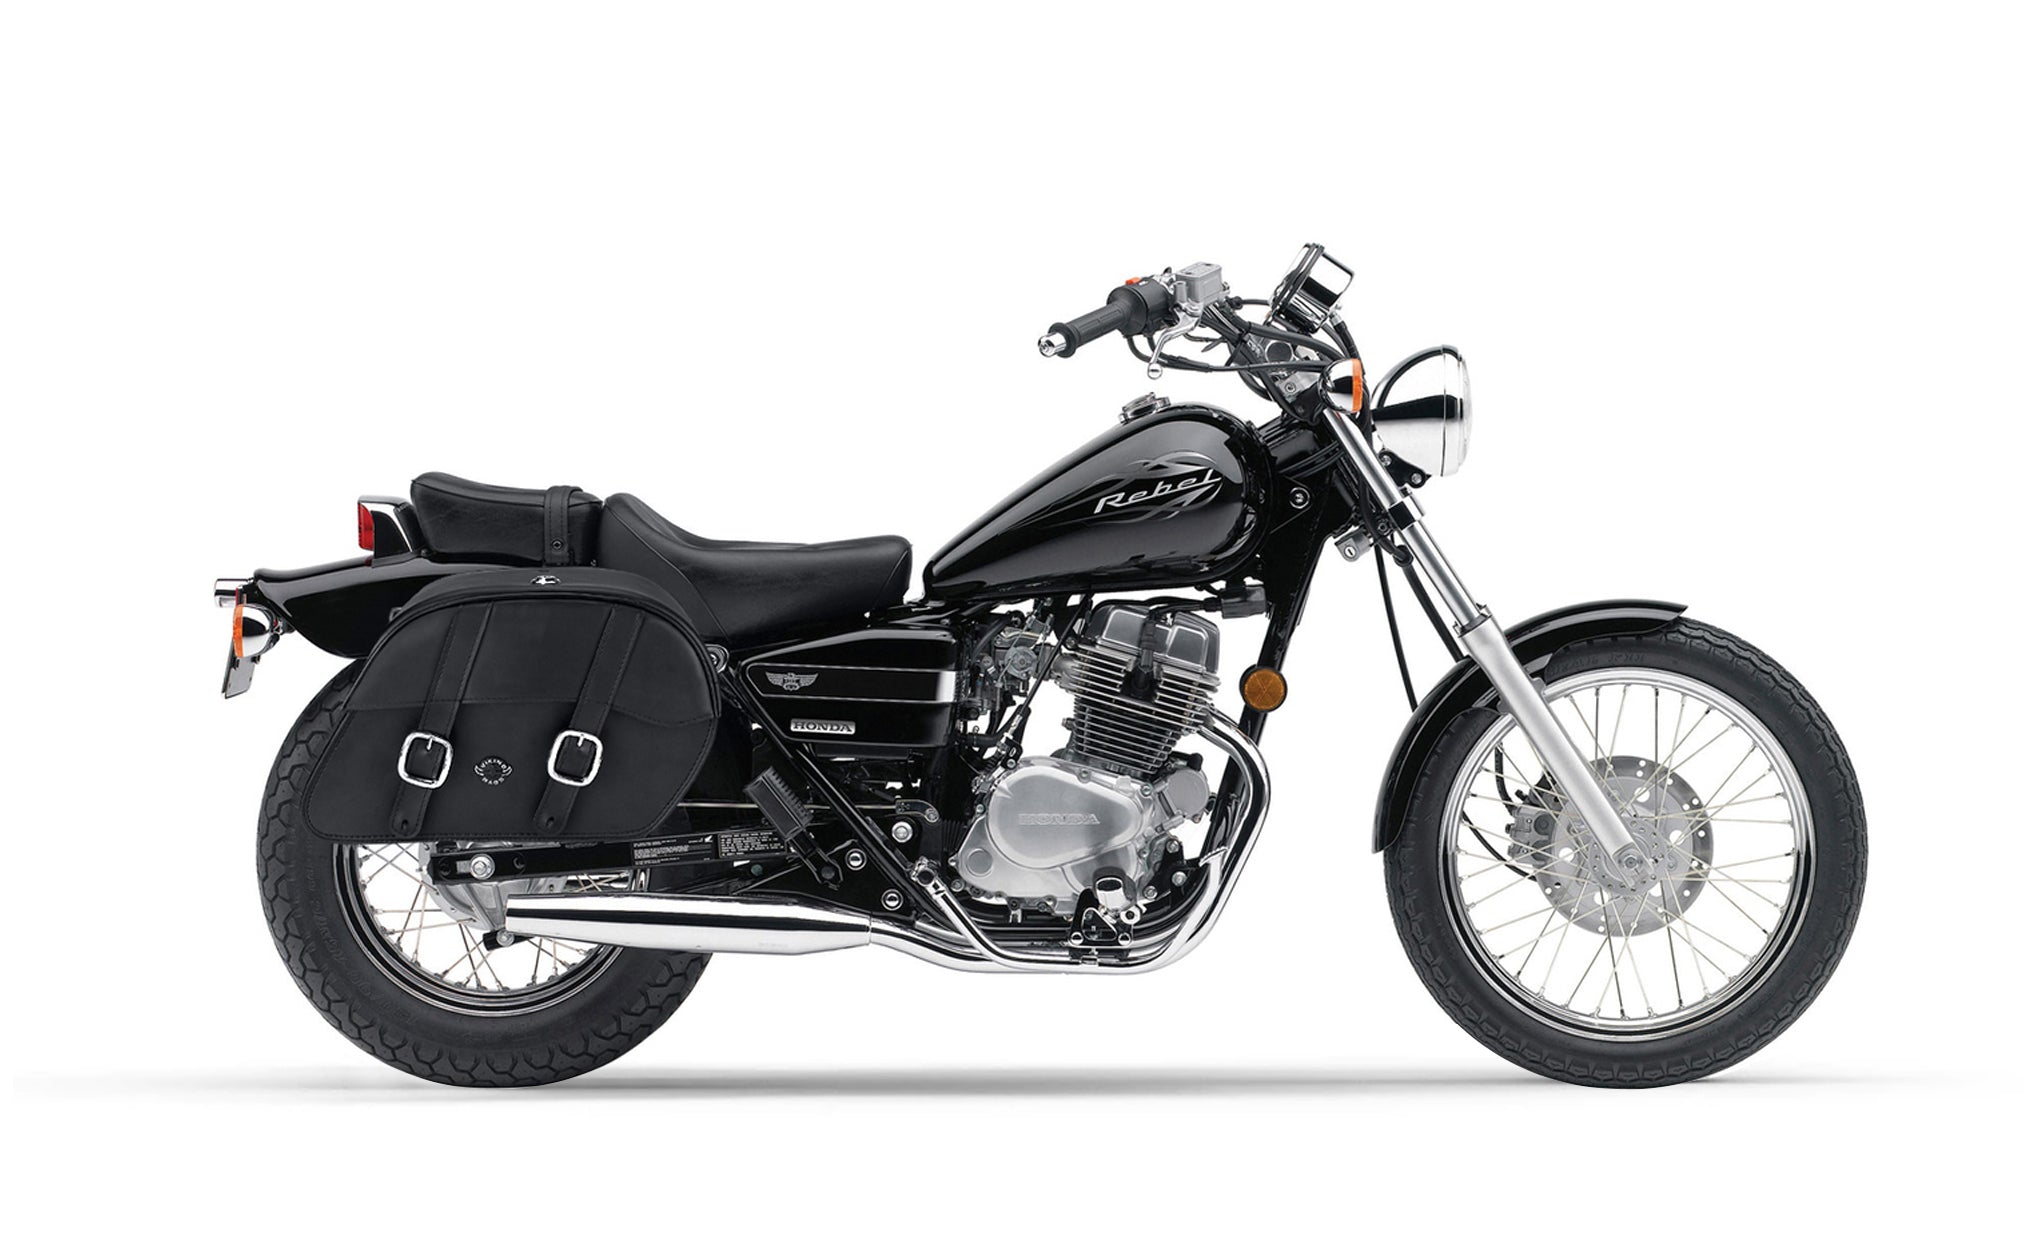 Viking Skarner Large Honda Rebel 250 Shock Cut Out Leather Motorcycle Saddlebags on Bike Photo @expand